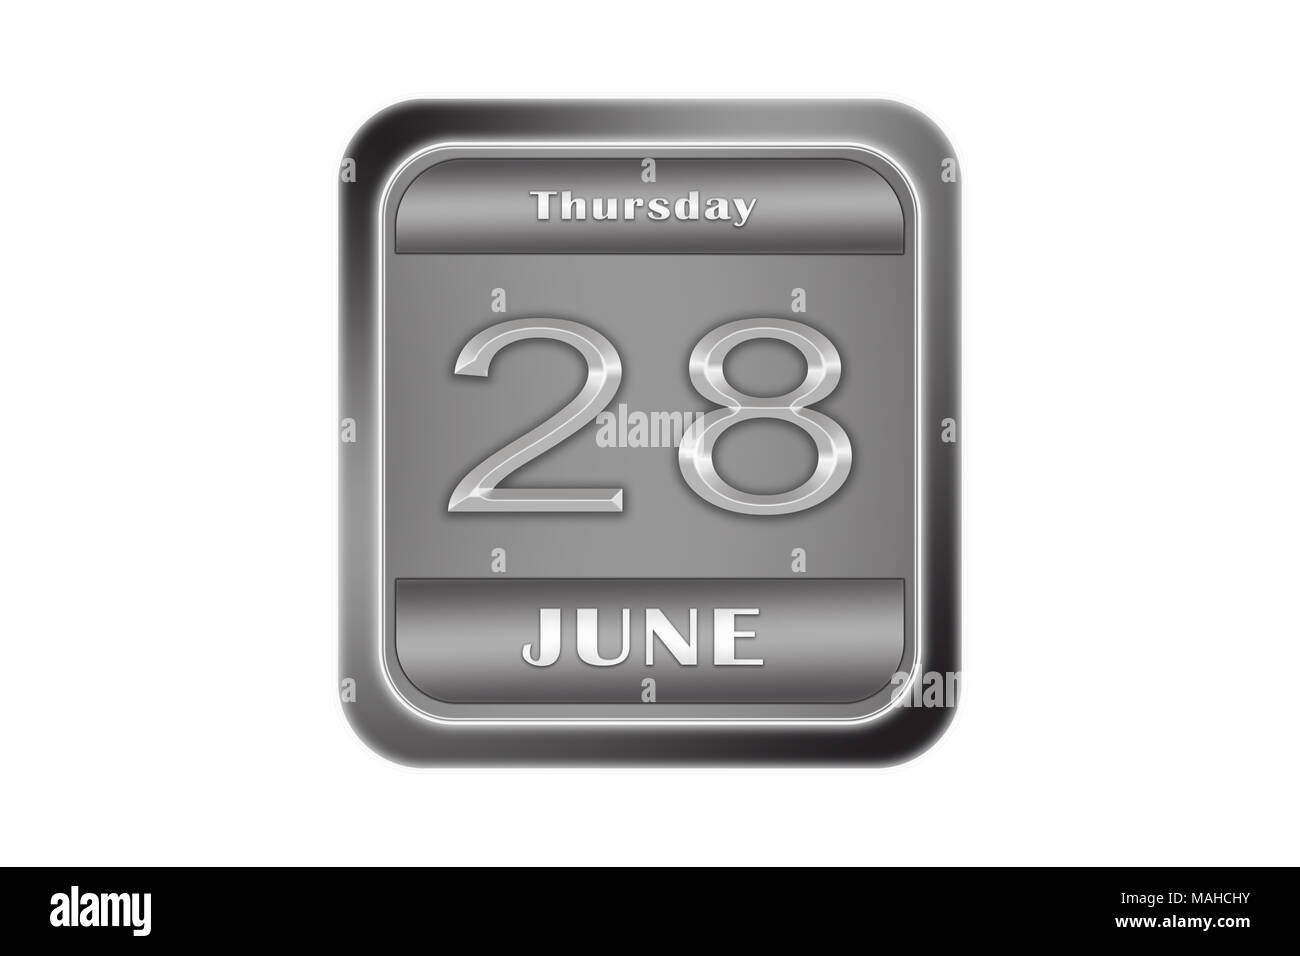 Date 28 June, Thursday written on a metal plate Stock Photo